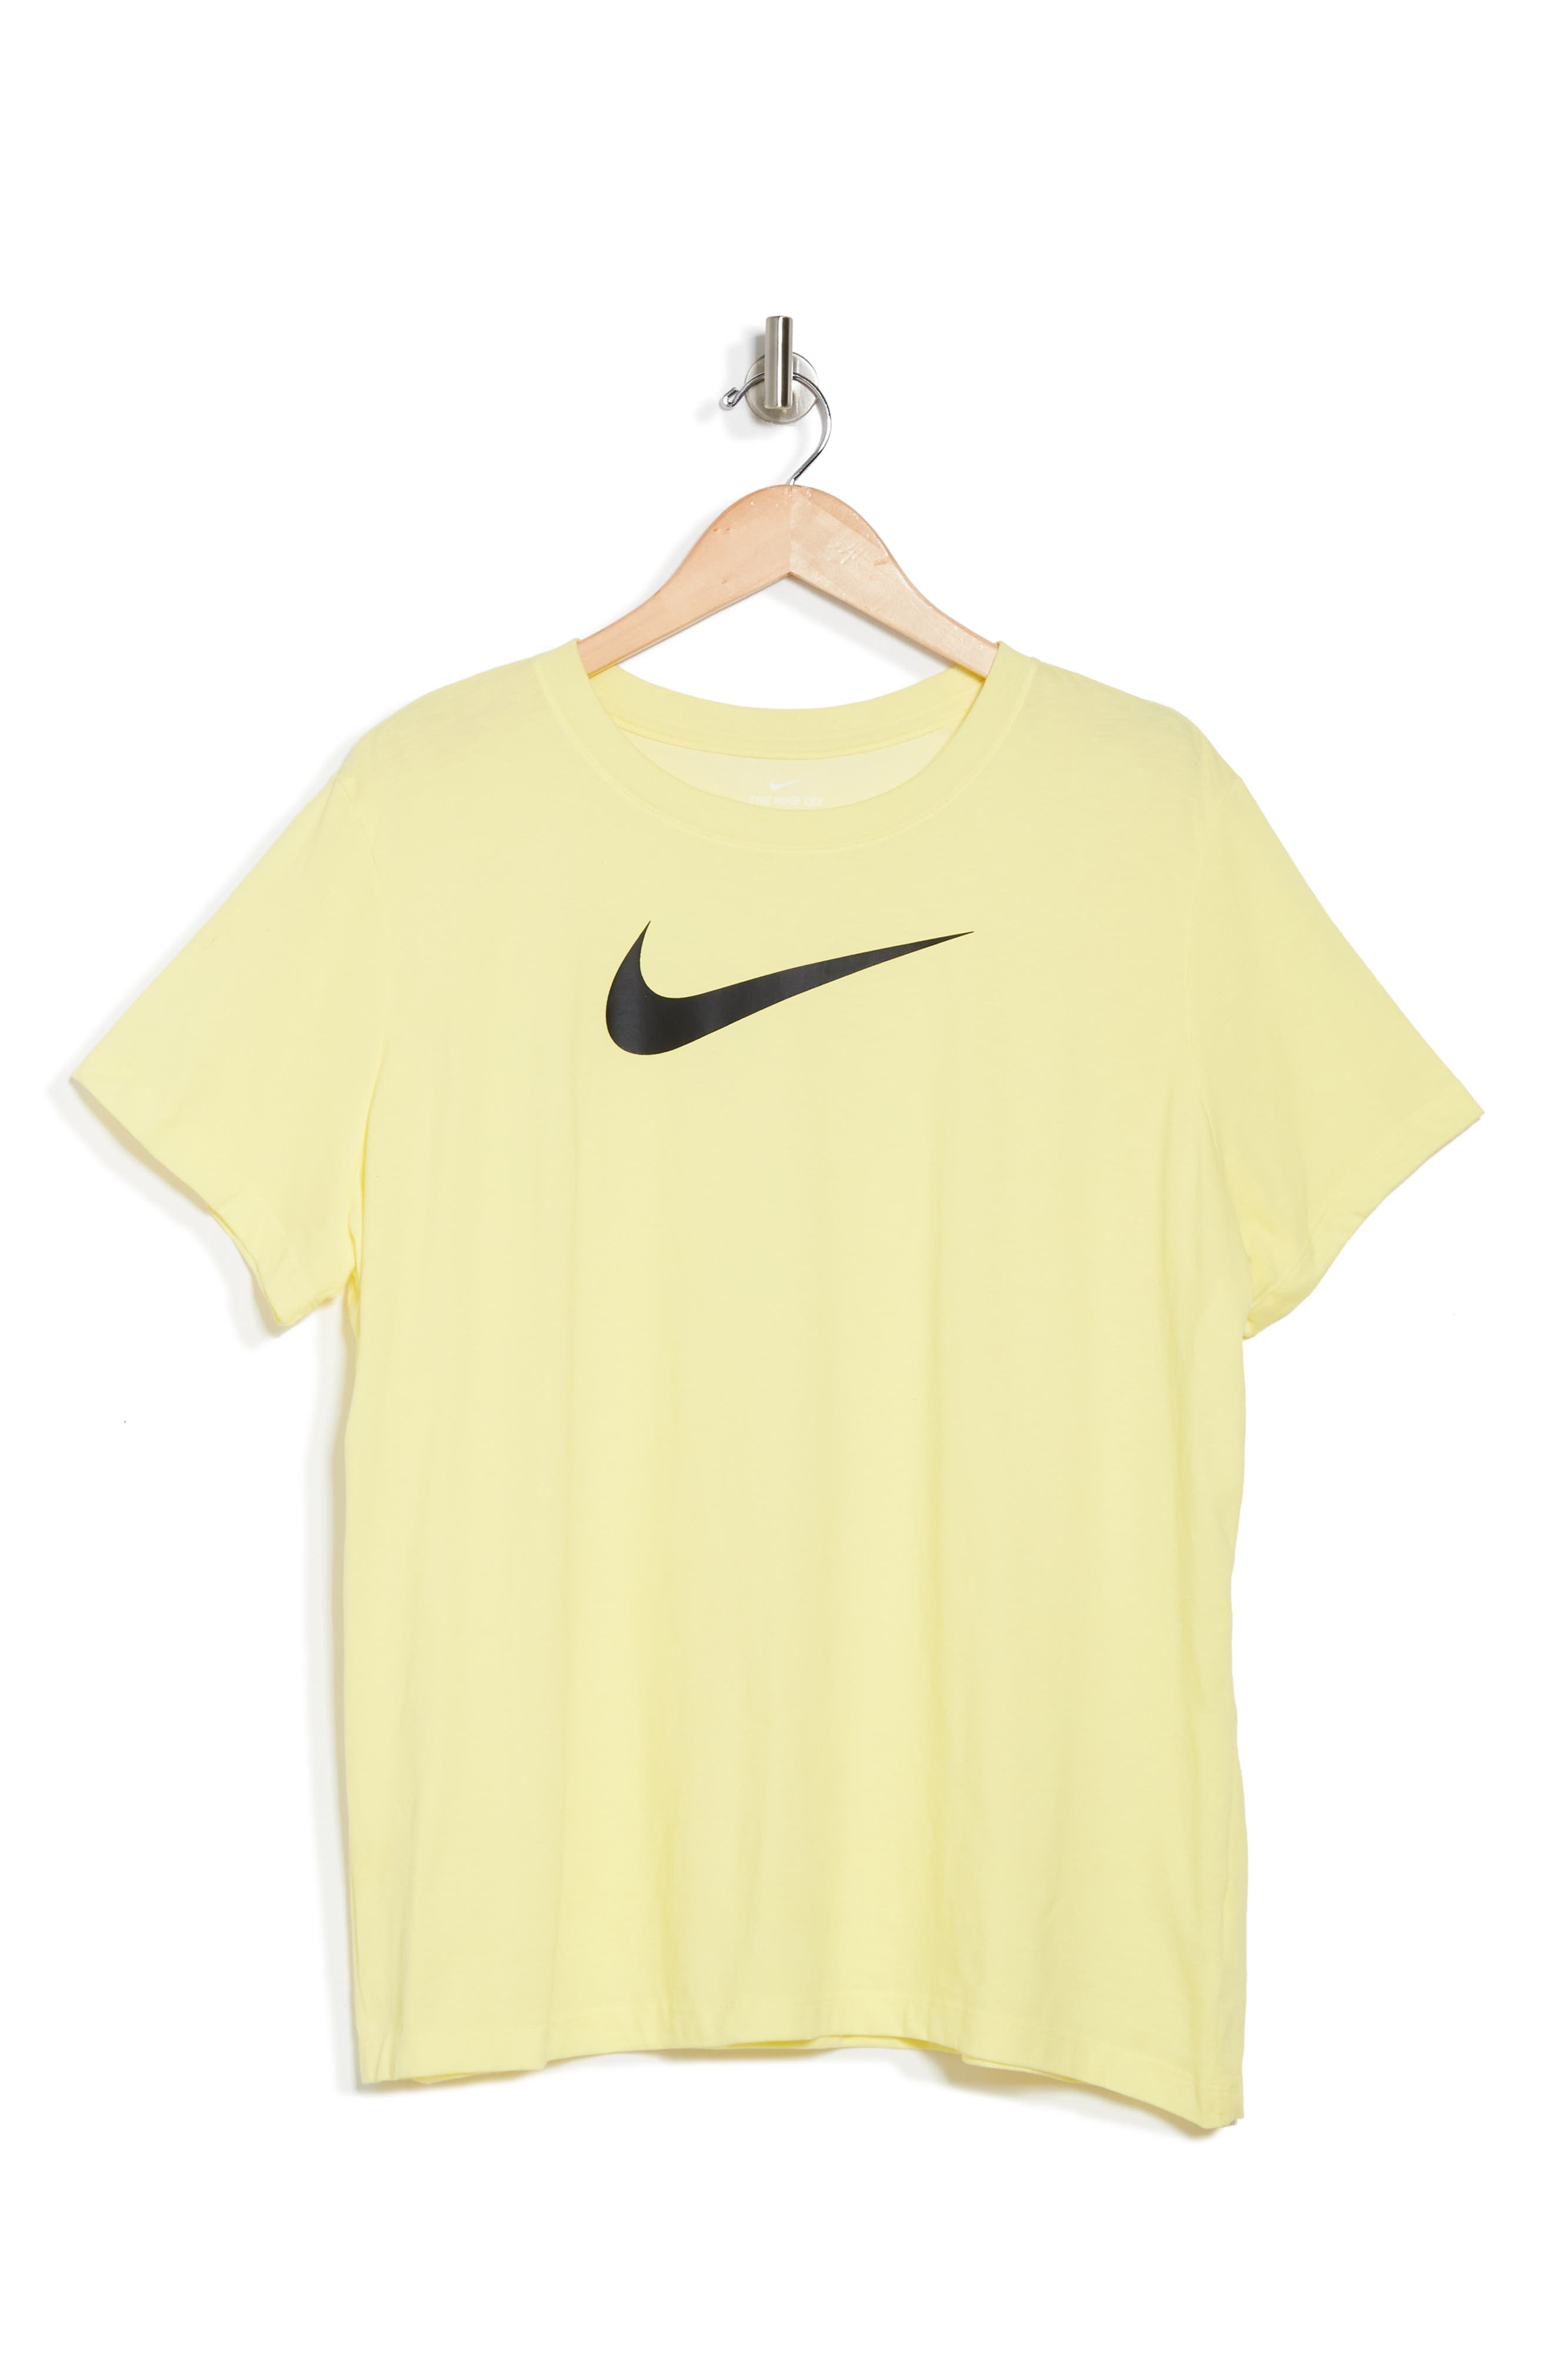 Nike Dri-fit Training T-shirt In Bmango/crmtnt